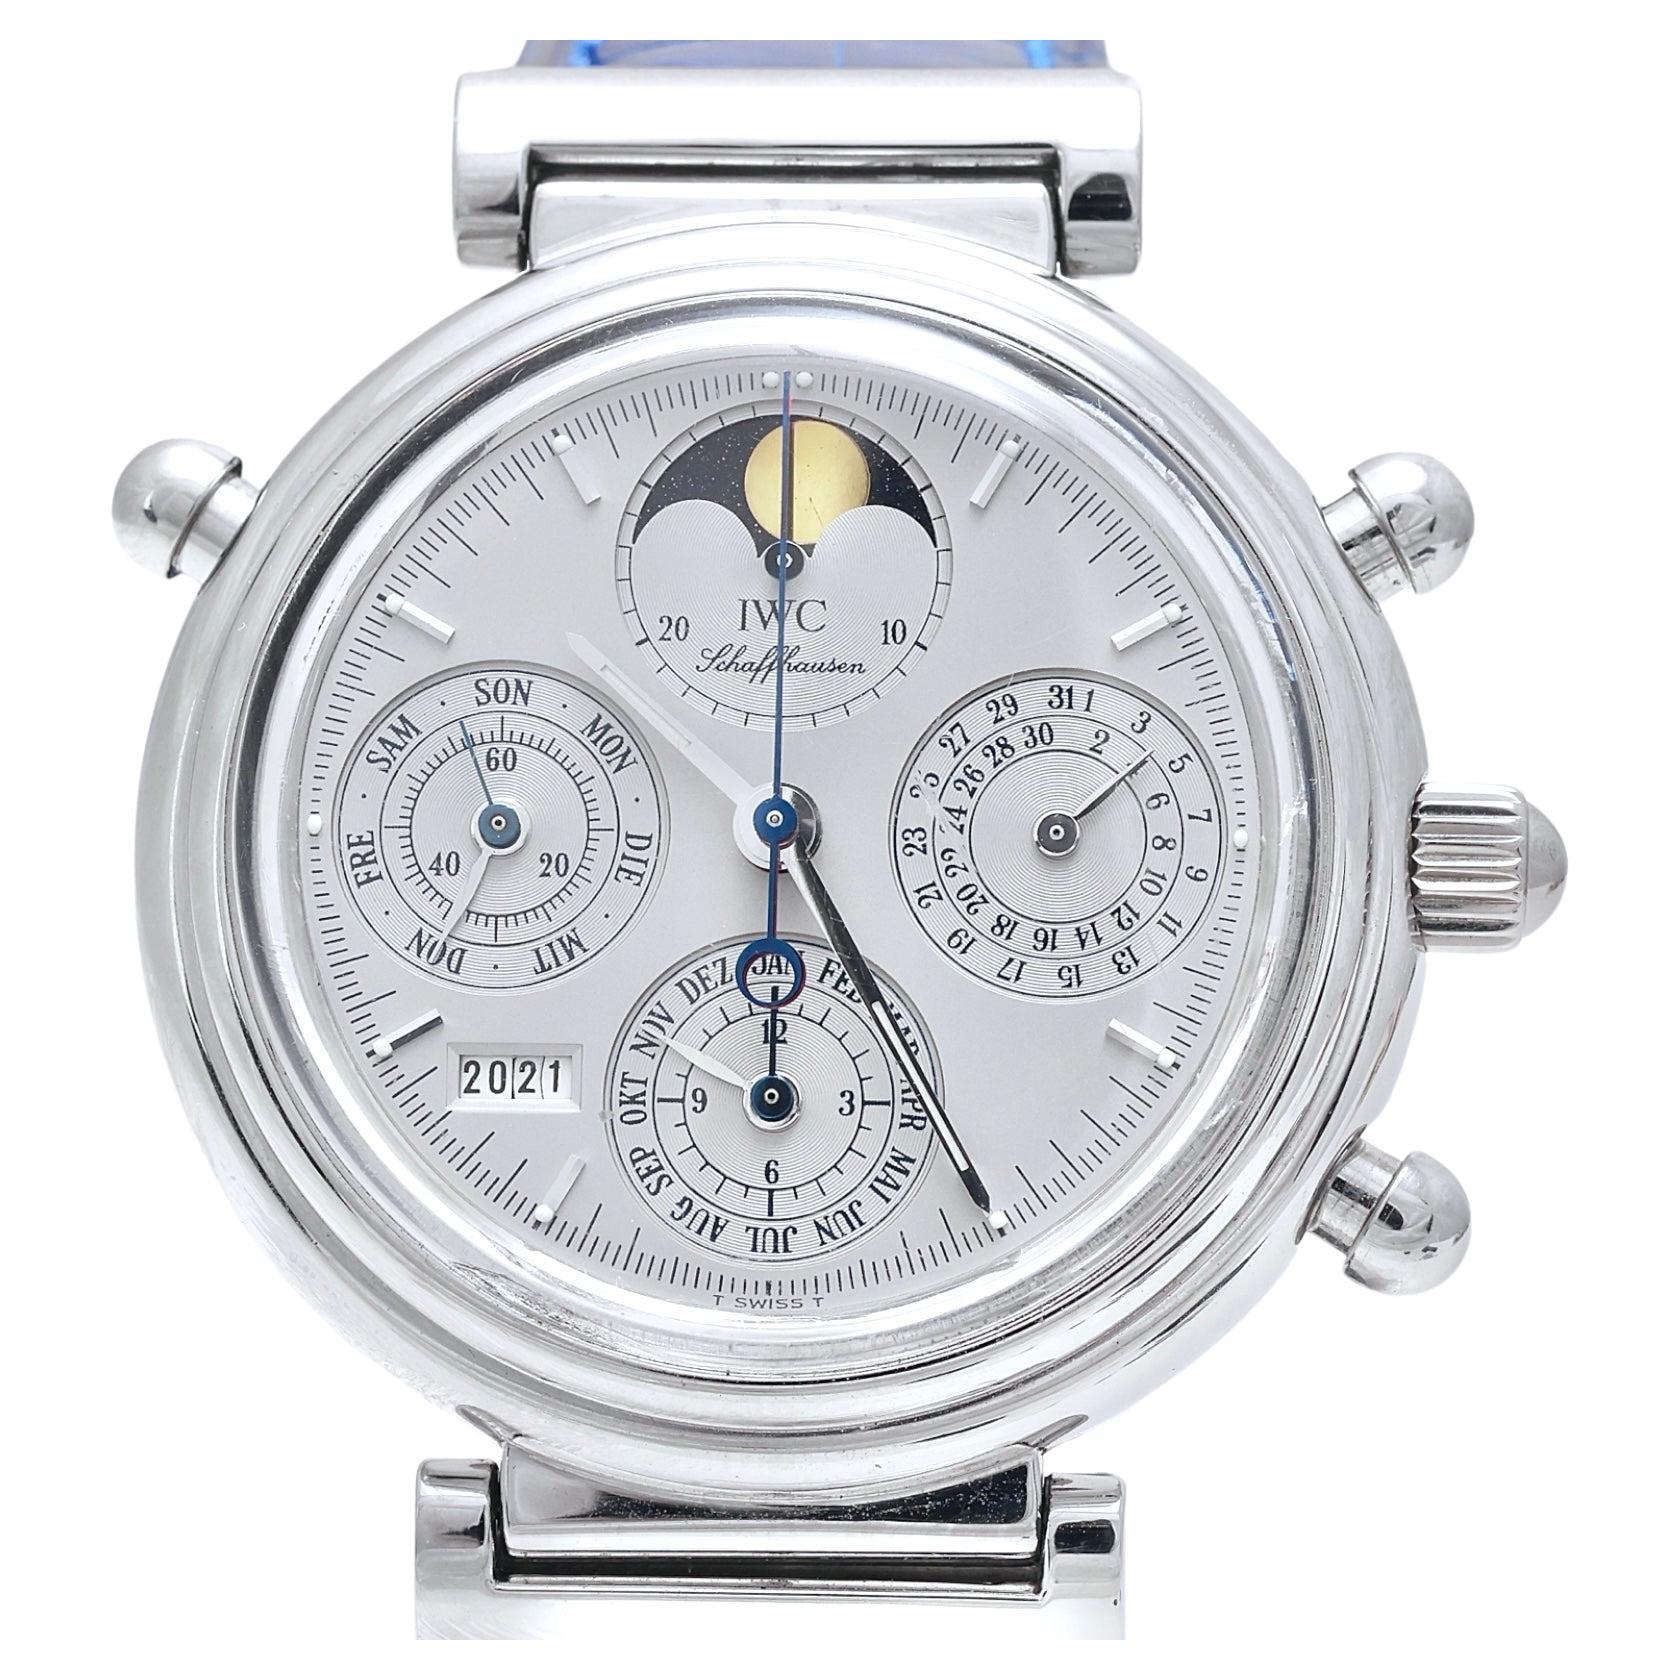 Platinum IWC Perpetual Calendar Split Second Chronograph Limited Wrist Watch3751 For Sale